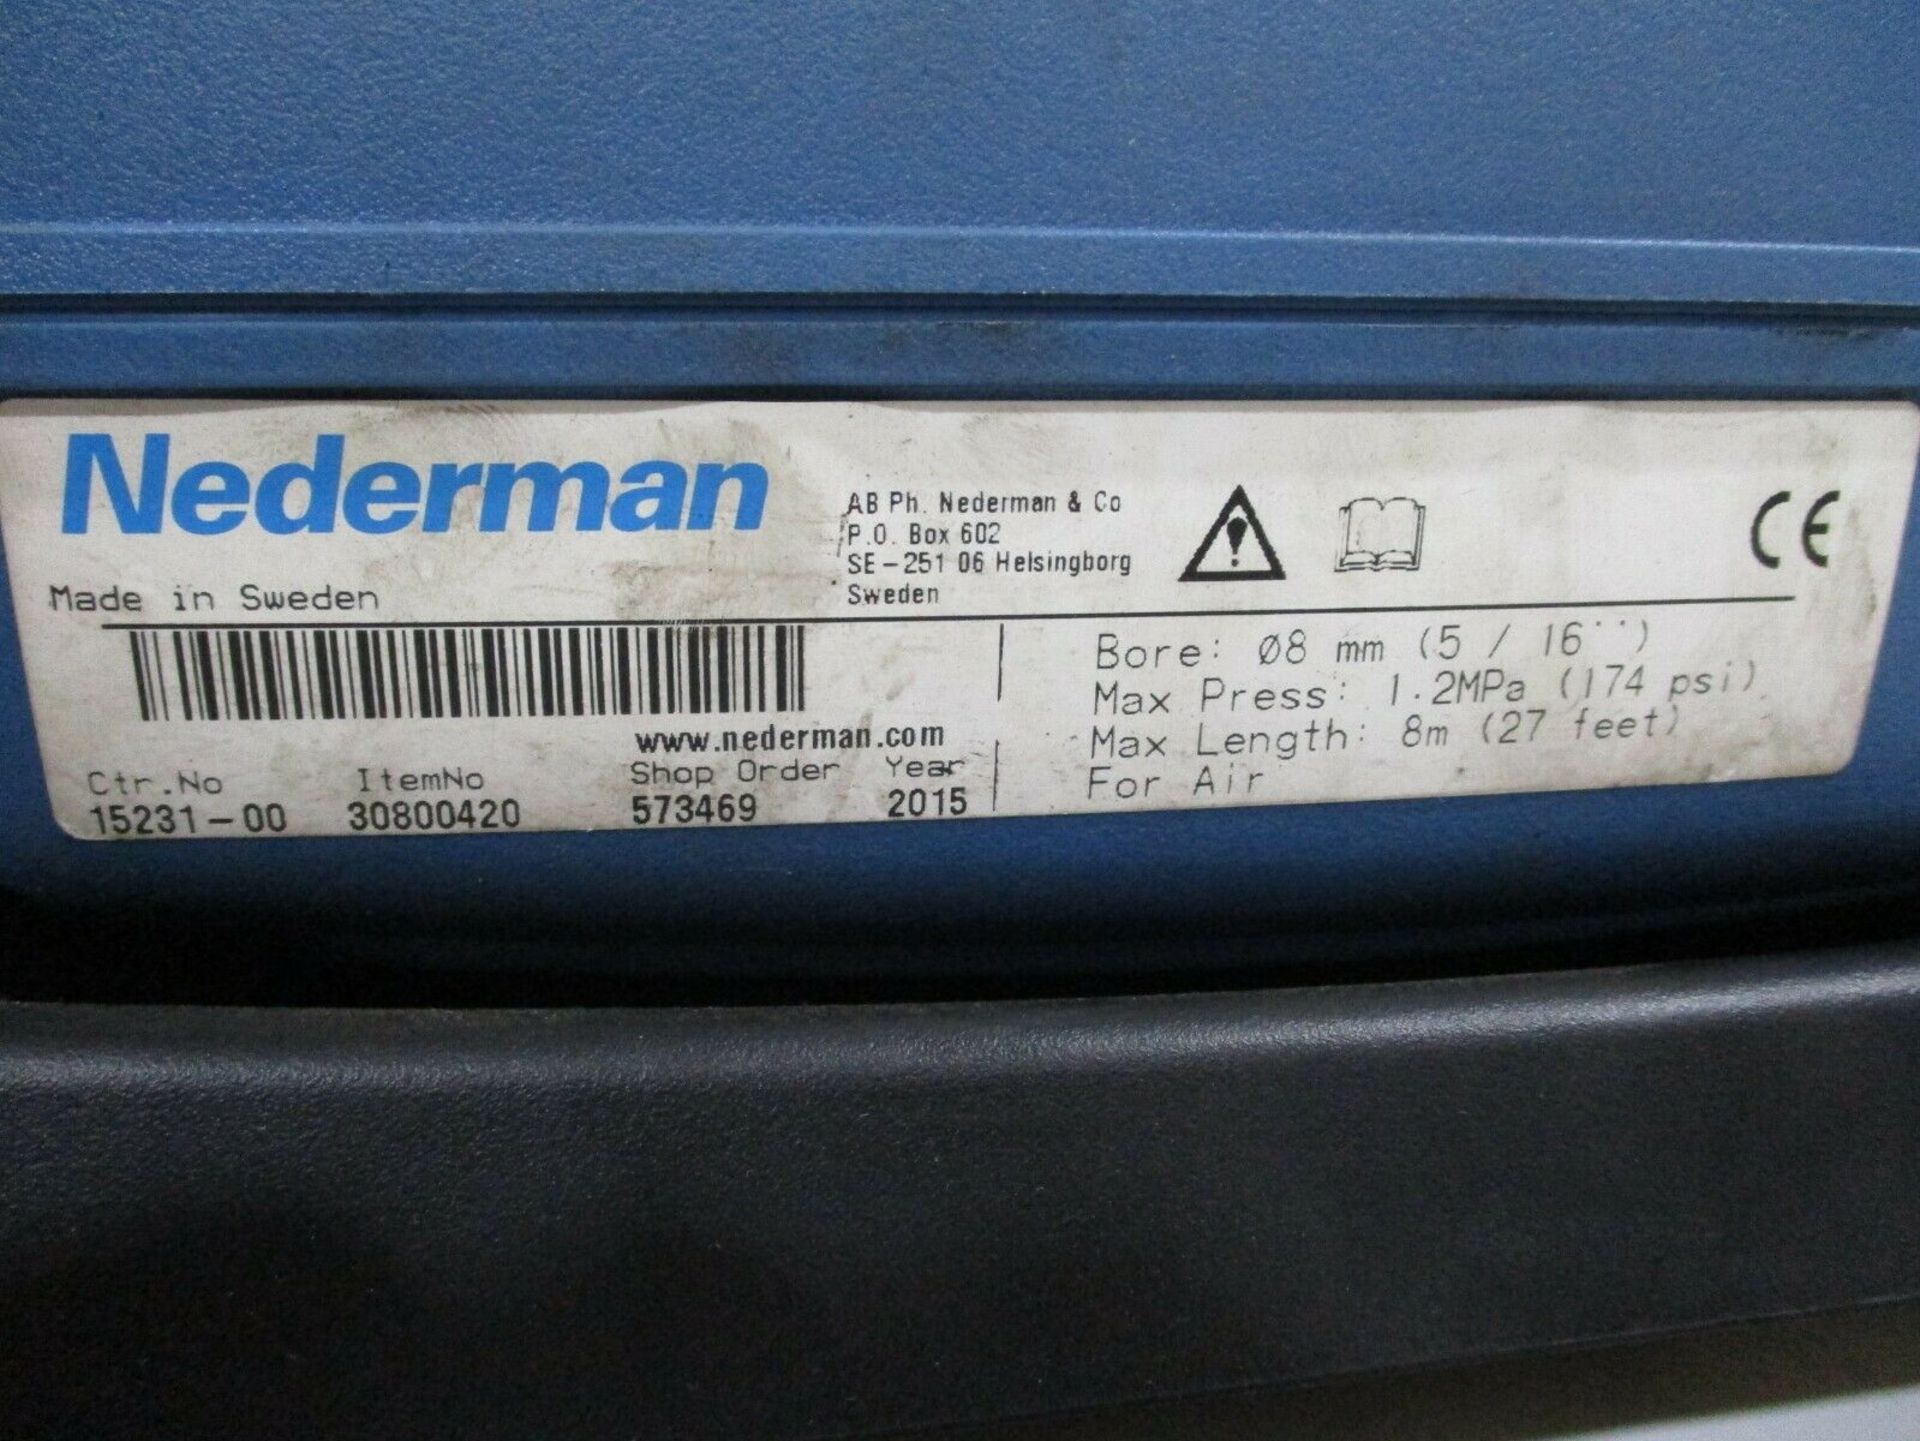 Nederman H20 Air Hose & Cable Reel - 8mm Hose, 8m Long - Image 3 of 3